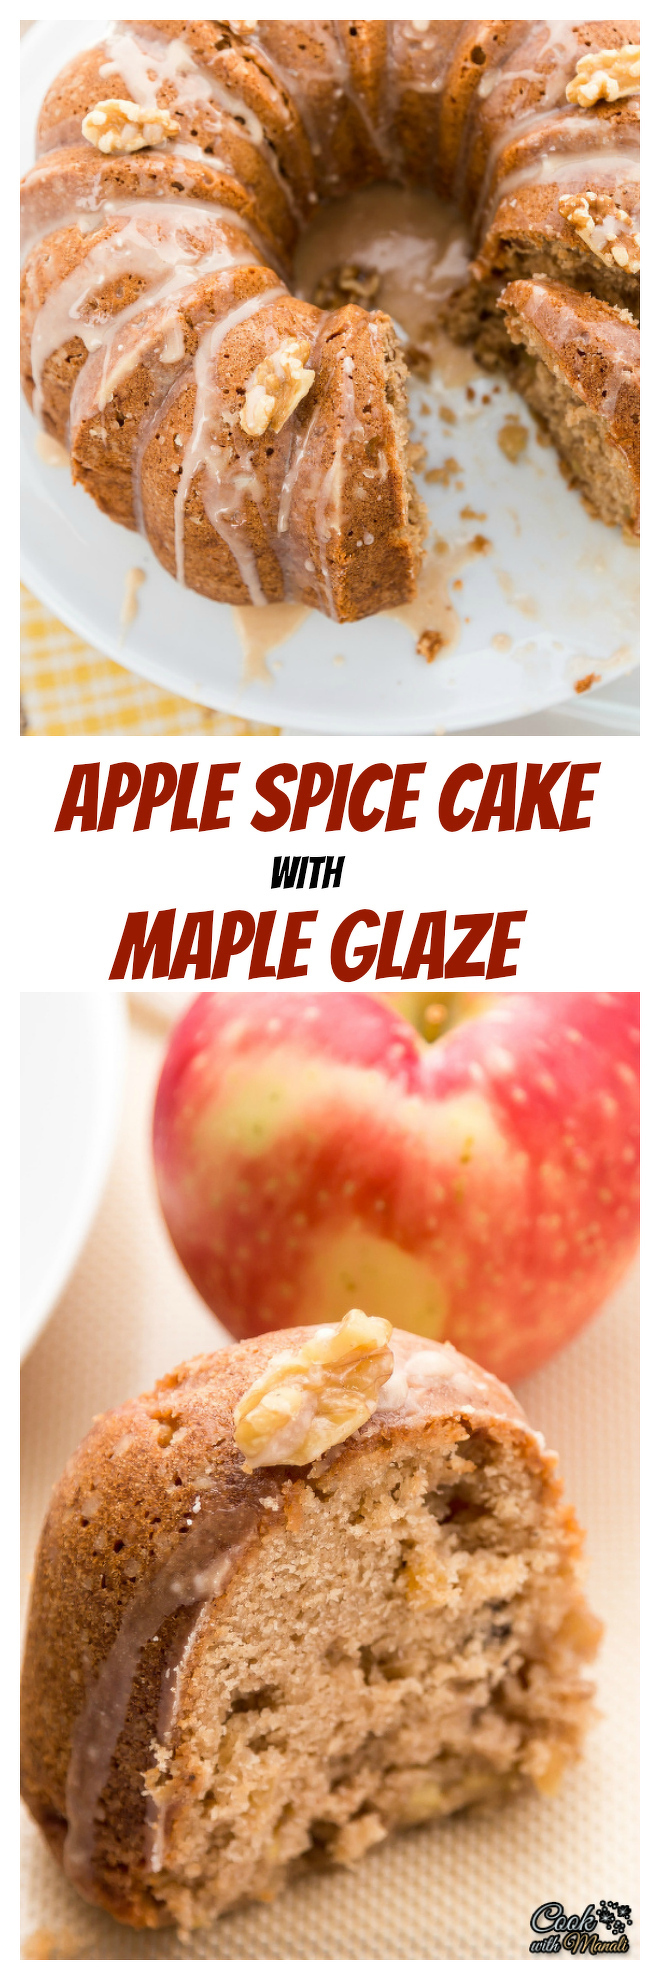 Apple-Spice-Cake-Collage-nocwm